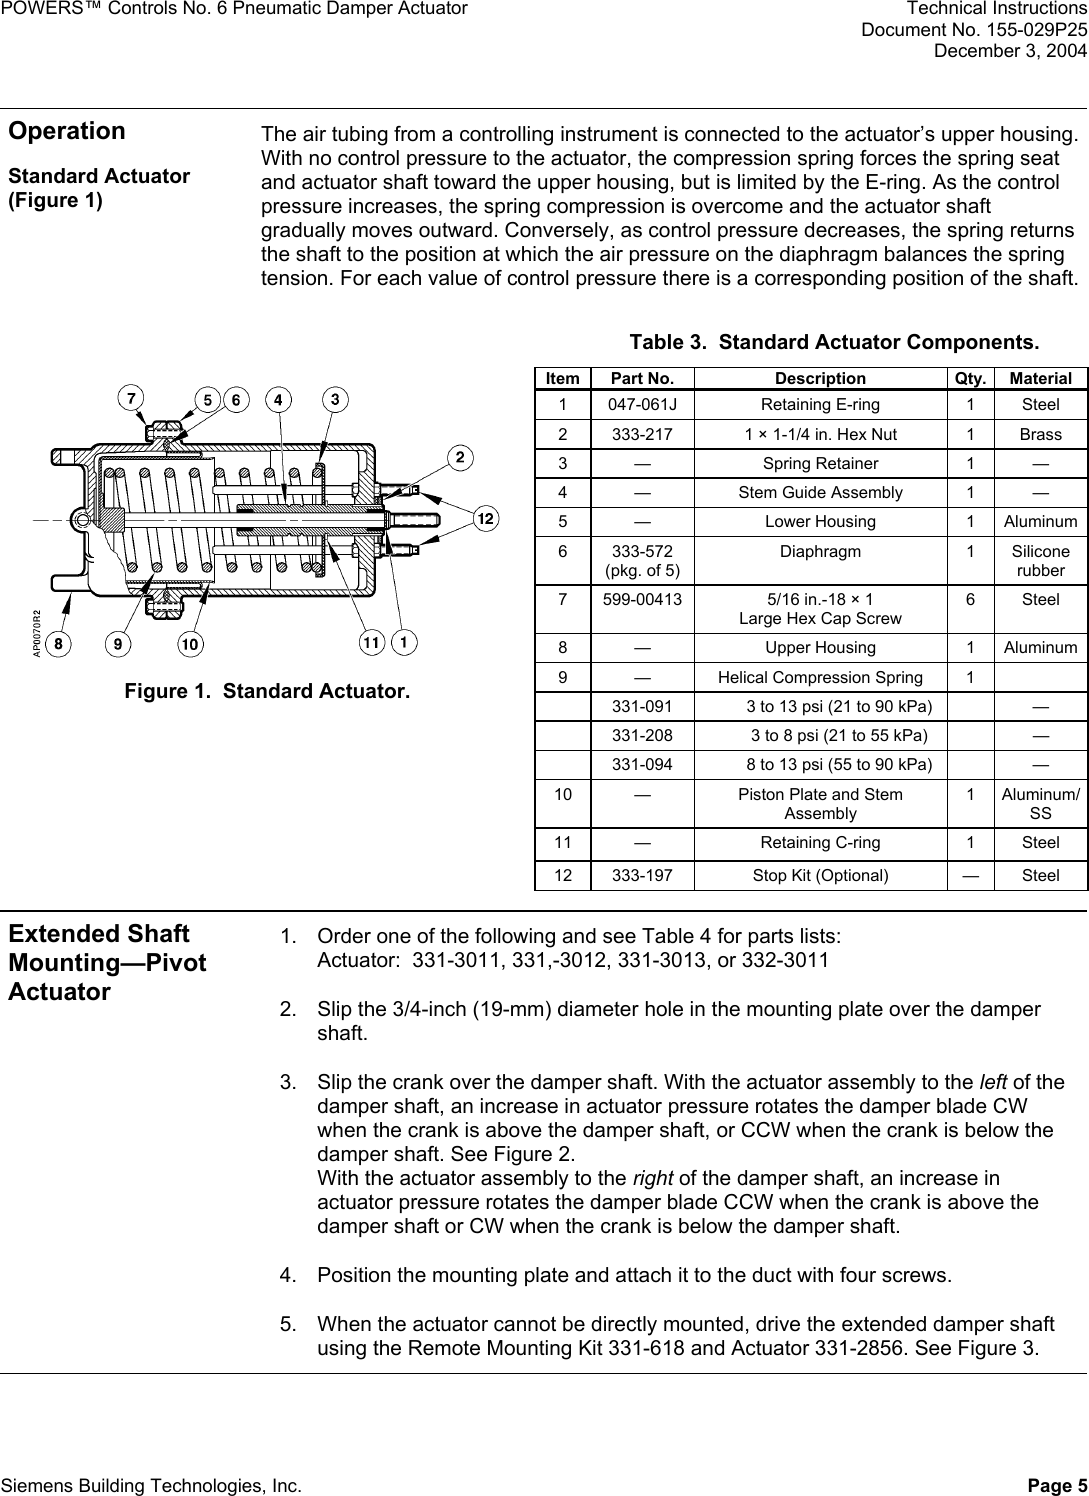 Page 5 of 12 - Siemens Siemens-331-2856-332-2856-Ap-331-3-Users-Manual- Powers Control - No. 6 Pneumatic Damper Actuator  Siemens-331-2856-332-2856-ap-331-3-users-manual